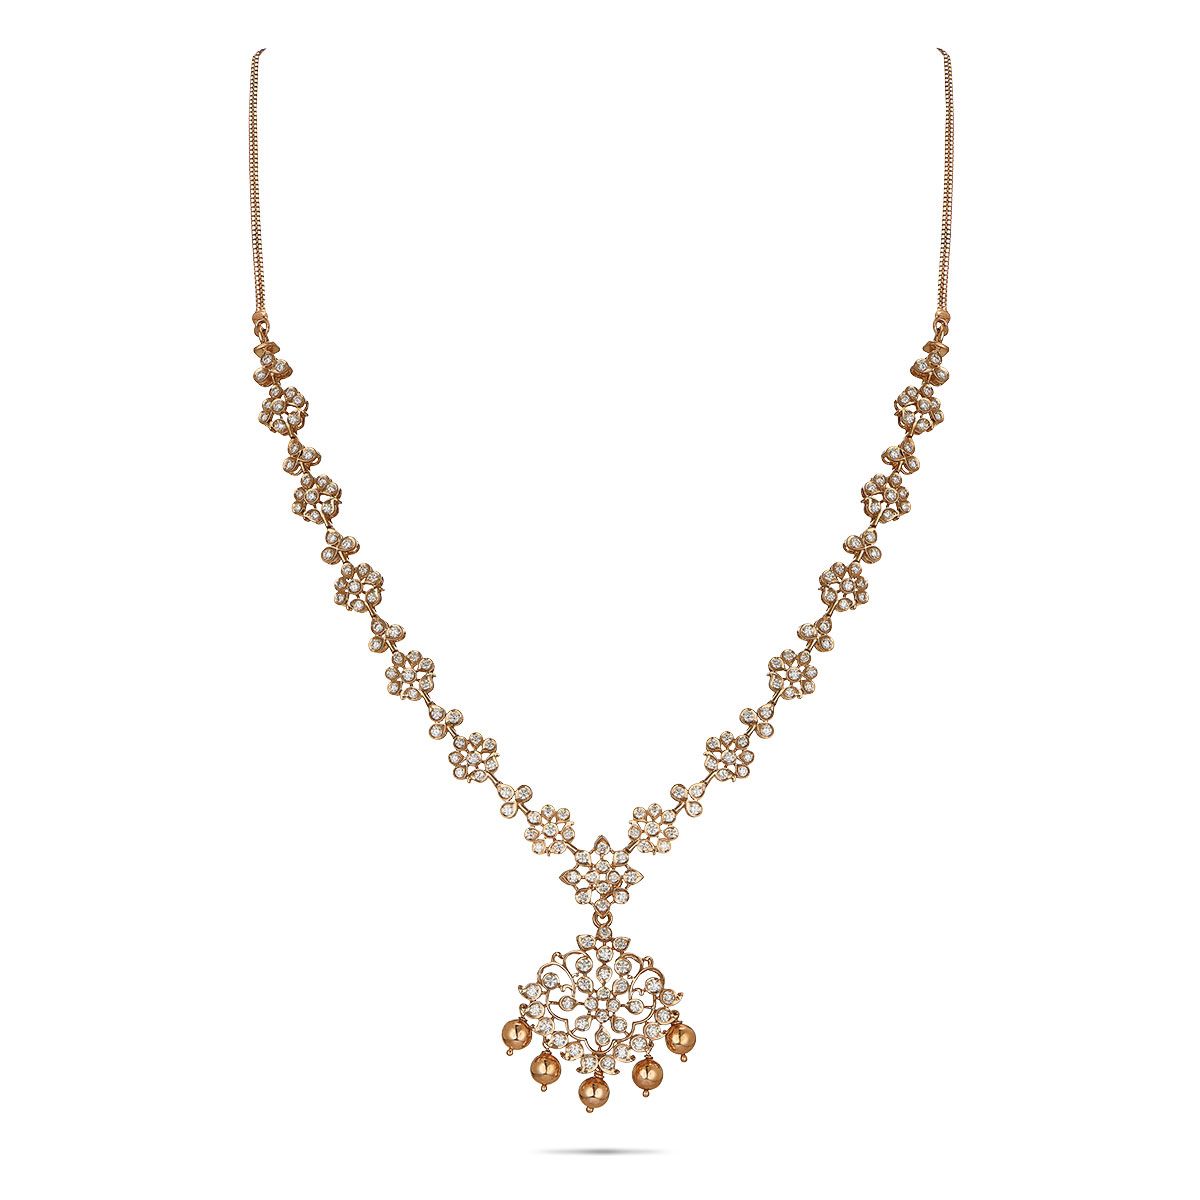 Shop Colored Diamond Necklaces & Pendants | Leibish